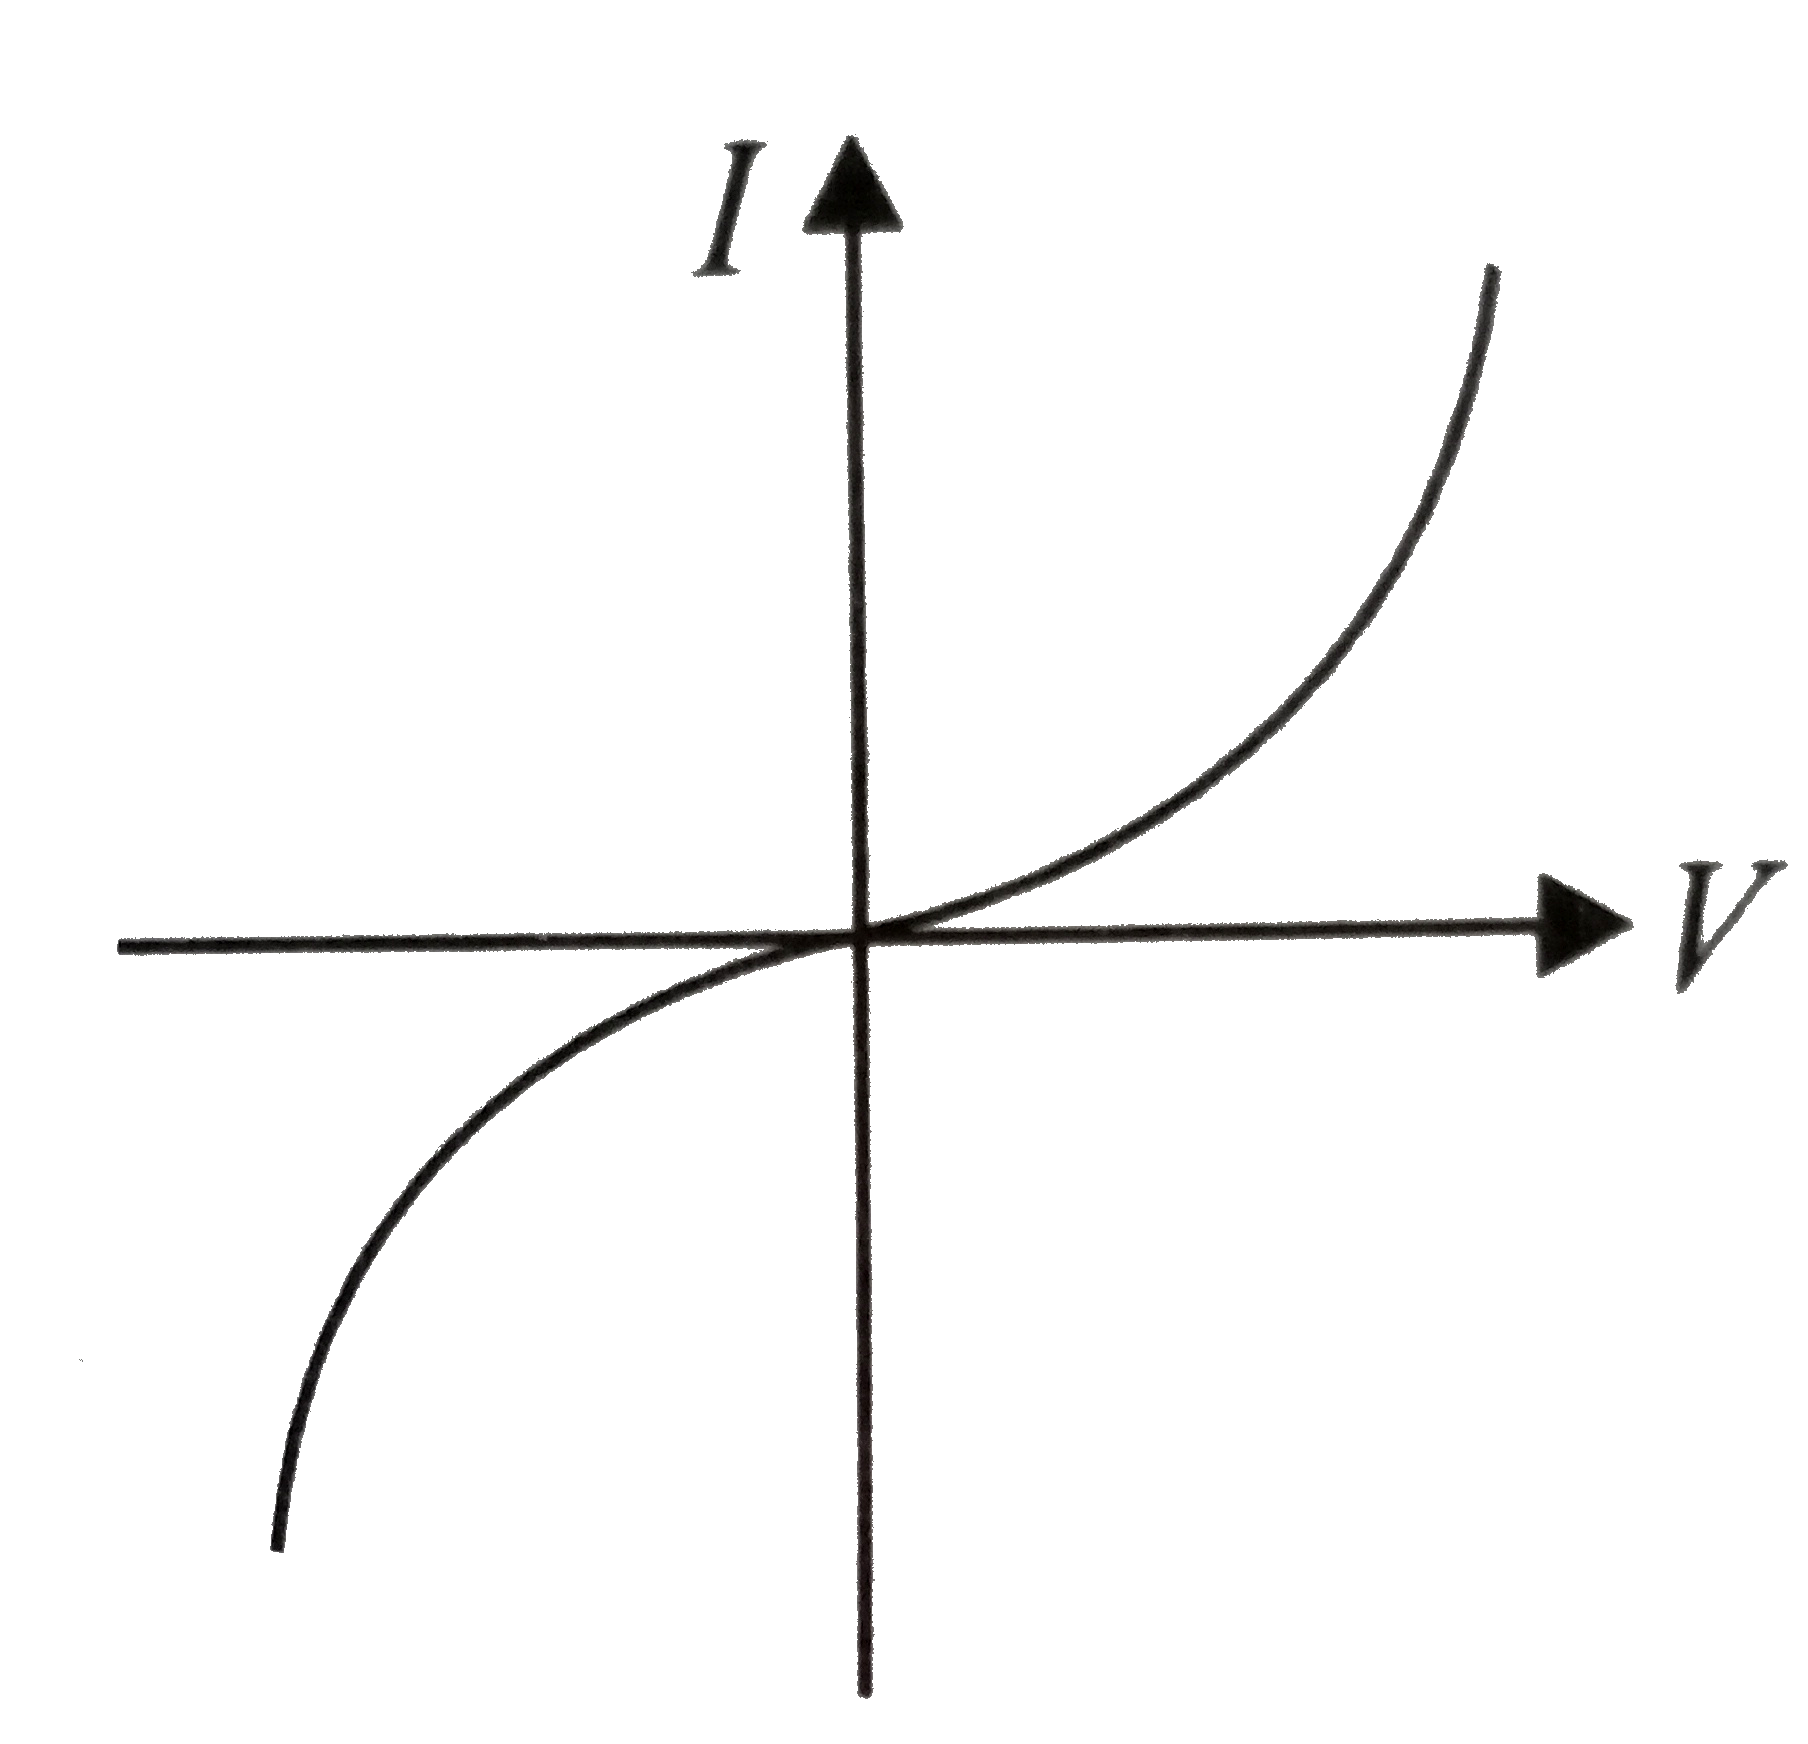 The I-V characteristics shown in the figure represents